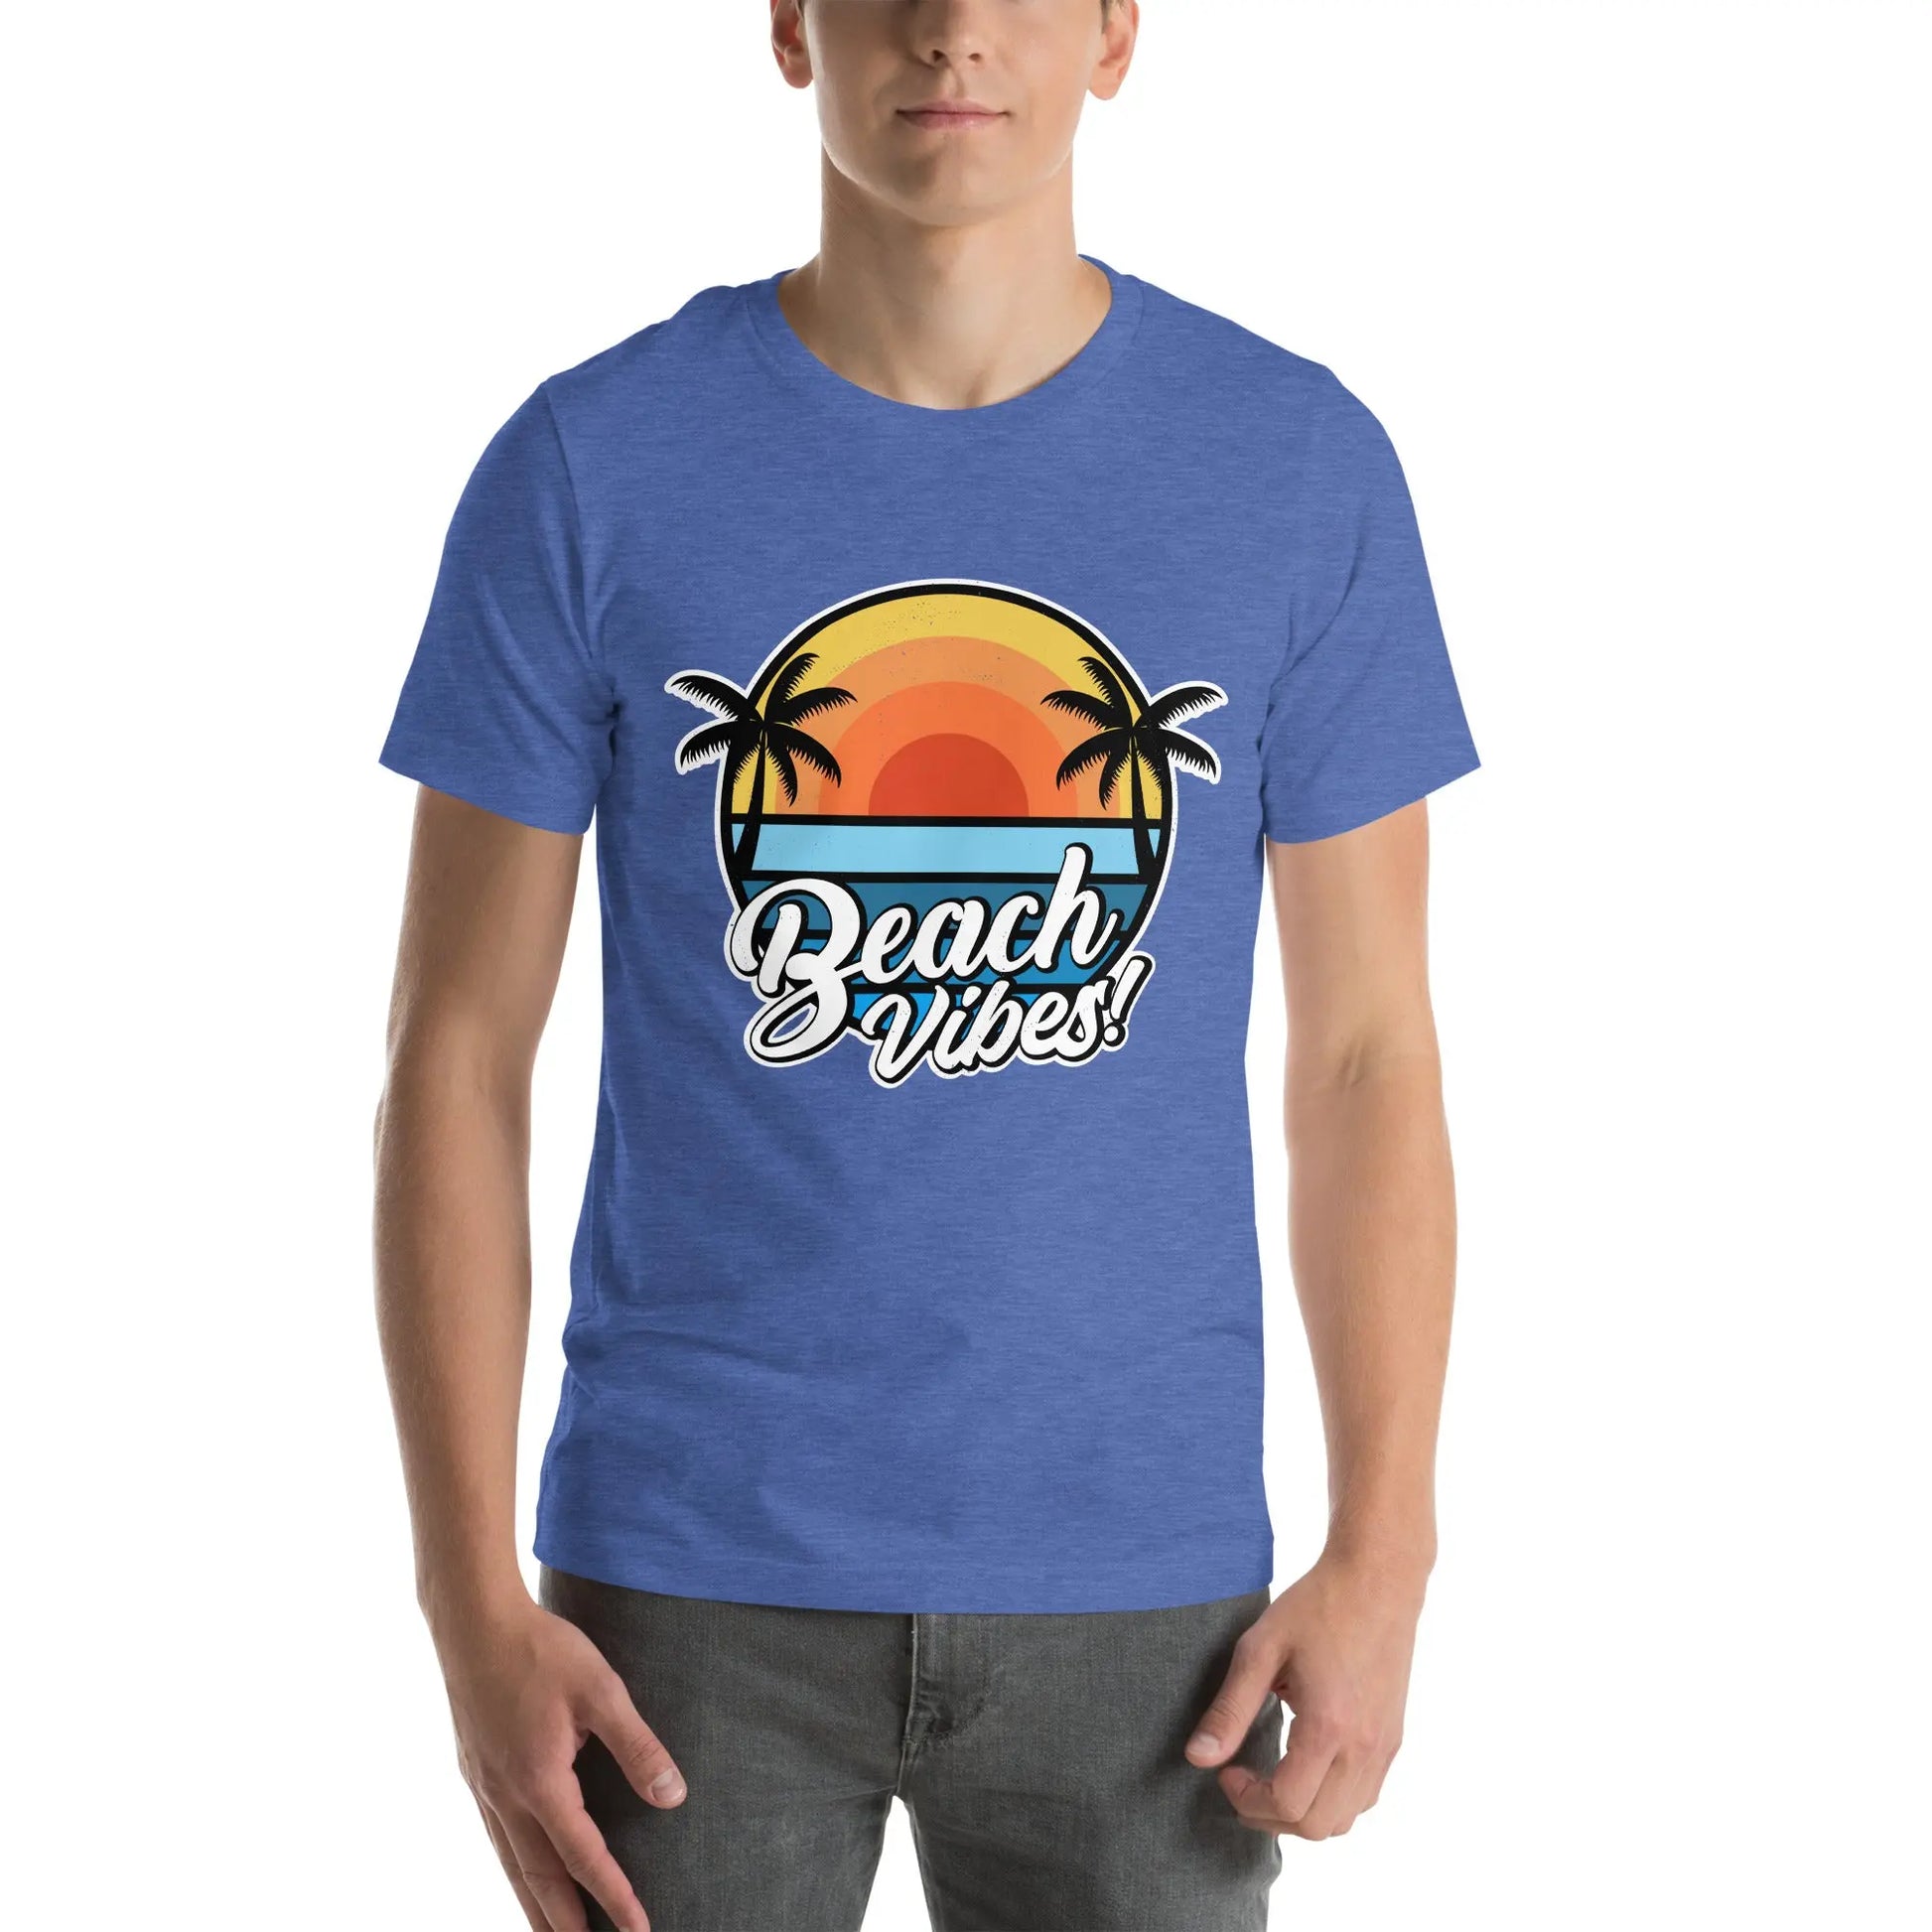 Beach Vibes with this Coastal Adult Unisex T-Shirt - Coastal Journeyz9496443_8530